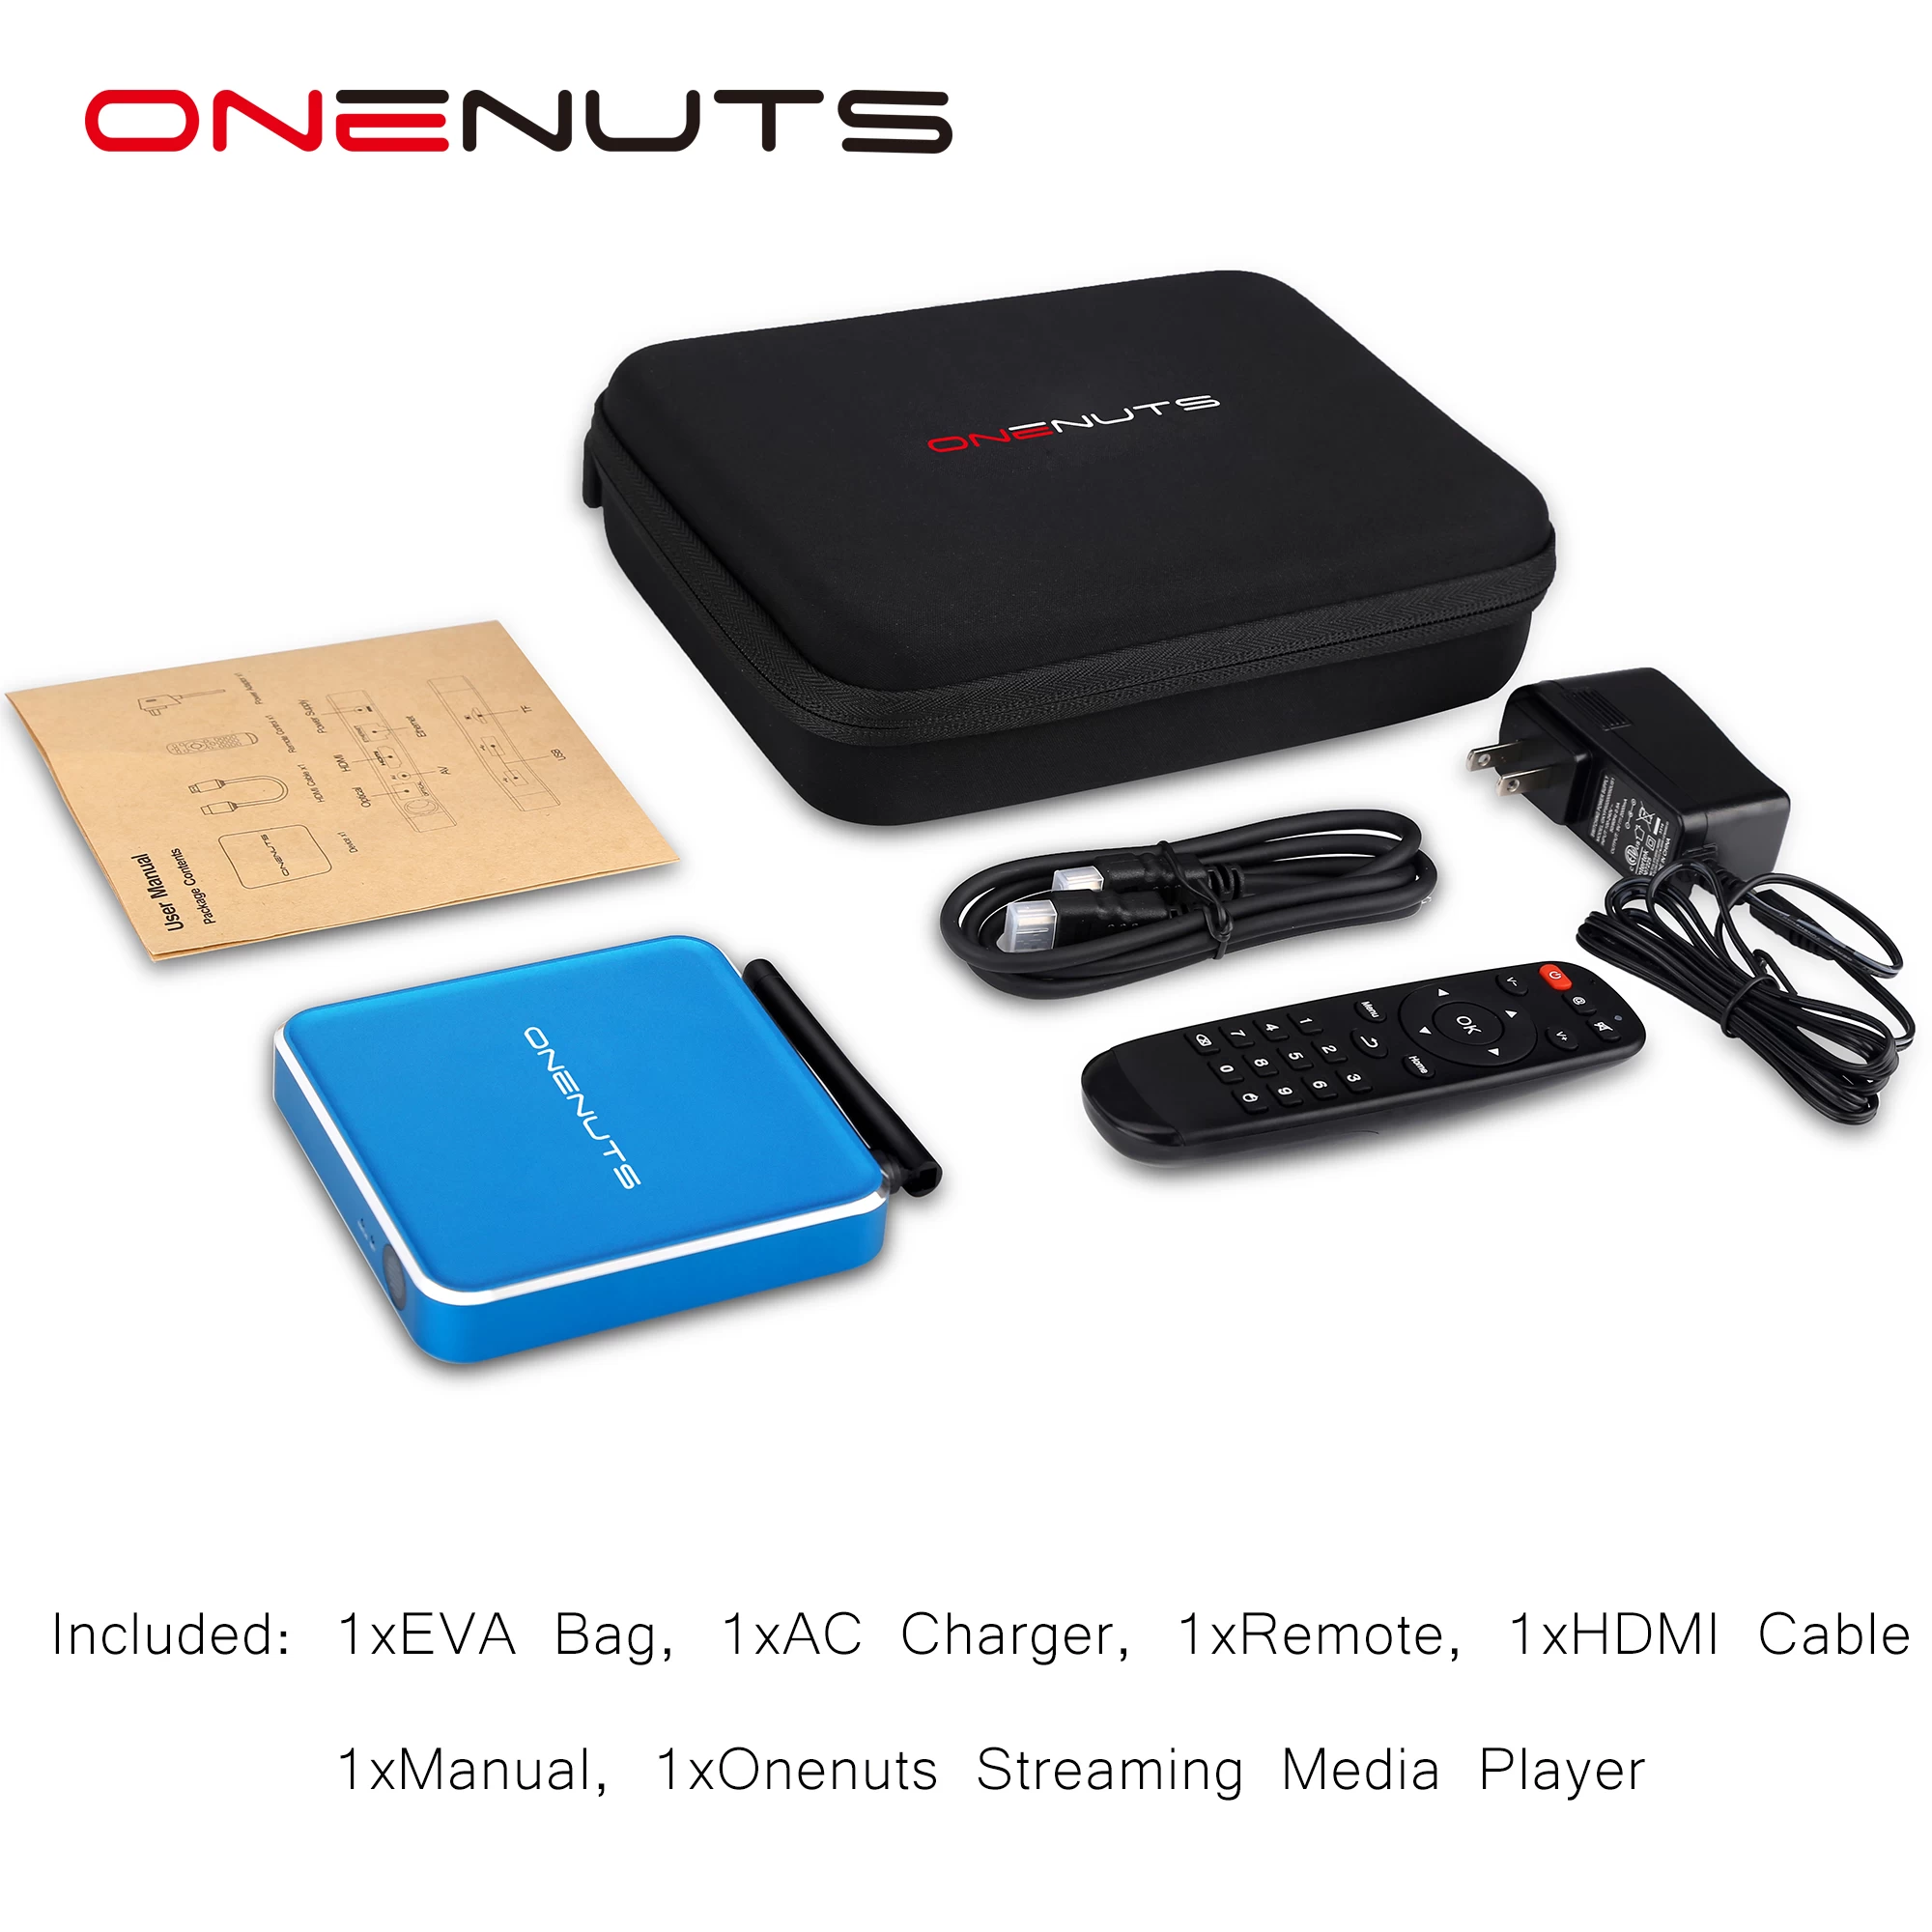 2 合 1 八核流媒体播放器和游戏 Android 电视盒，带 Android 6.0 Marshmallow 2G DDR3 16G eMMC 双频 AC WIFI 支持 KODI YouTube Netflix Facebook 等等 - Onenuts Nut 1 蓝色